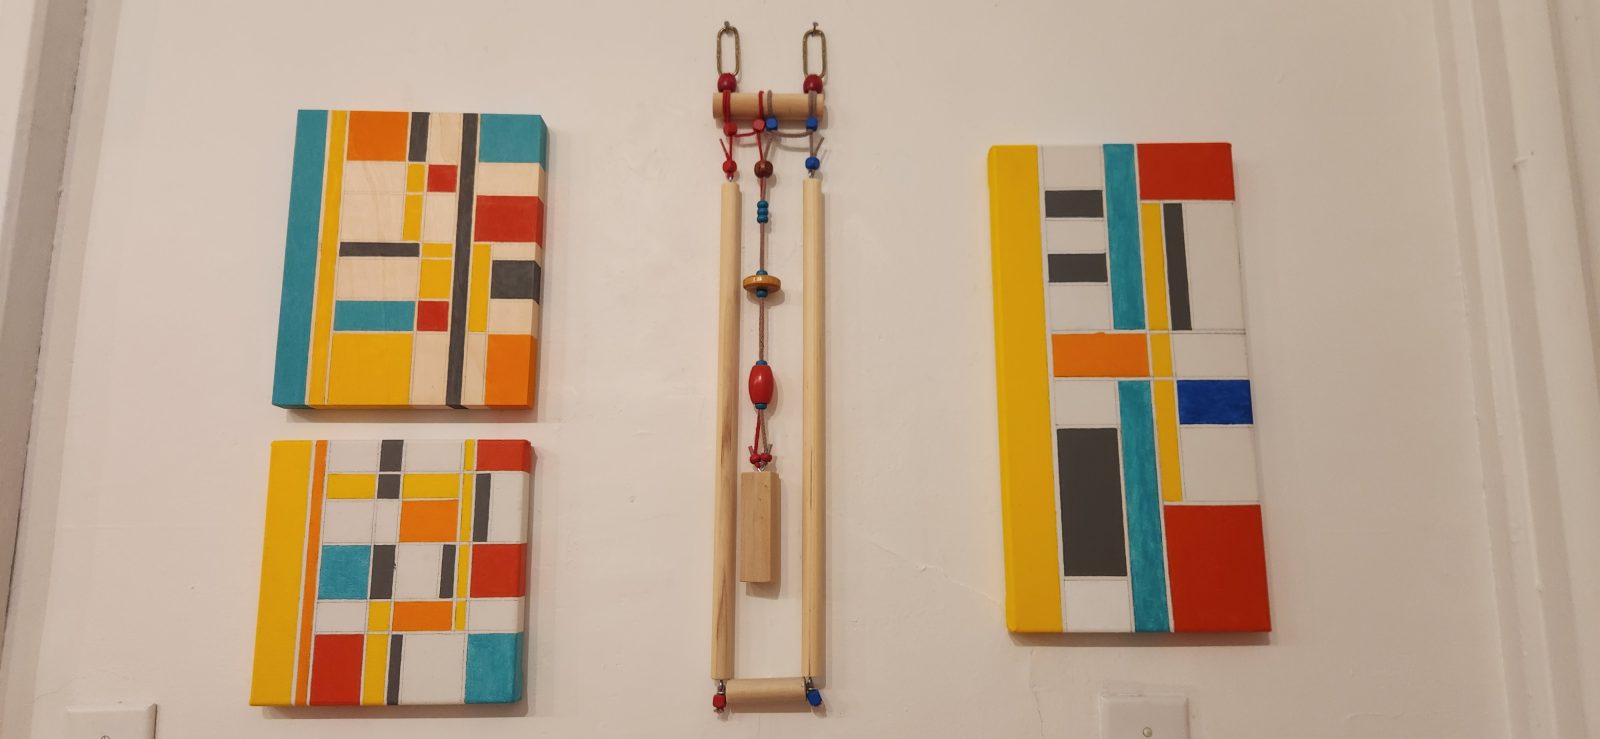 Arbor Gallery hosts two textile exhibits